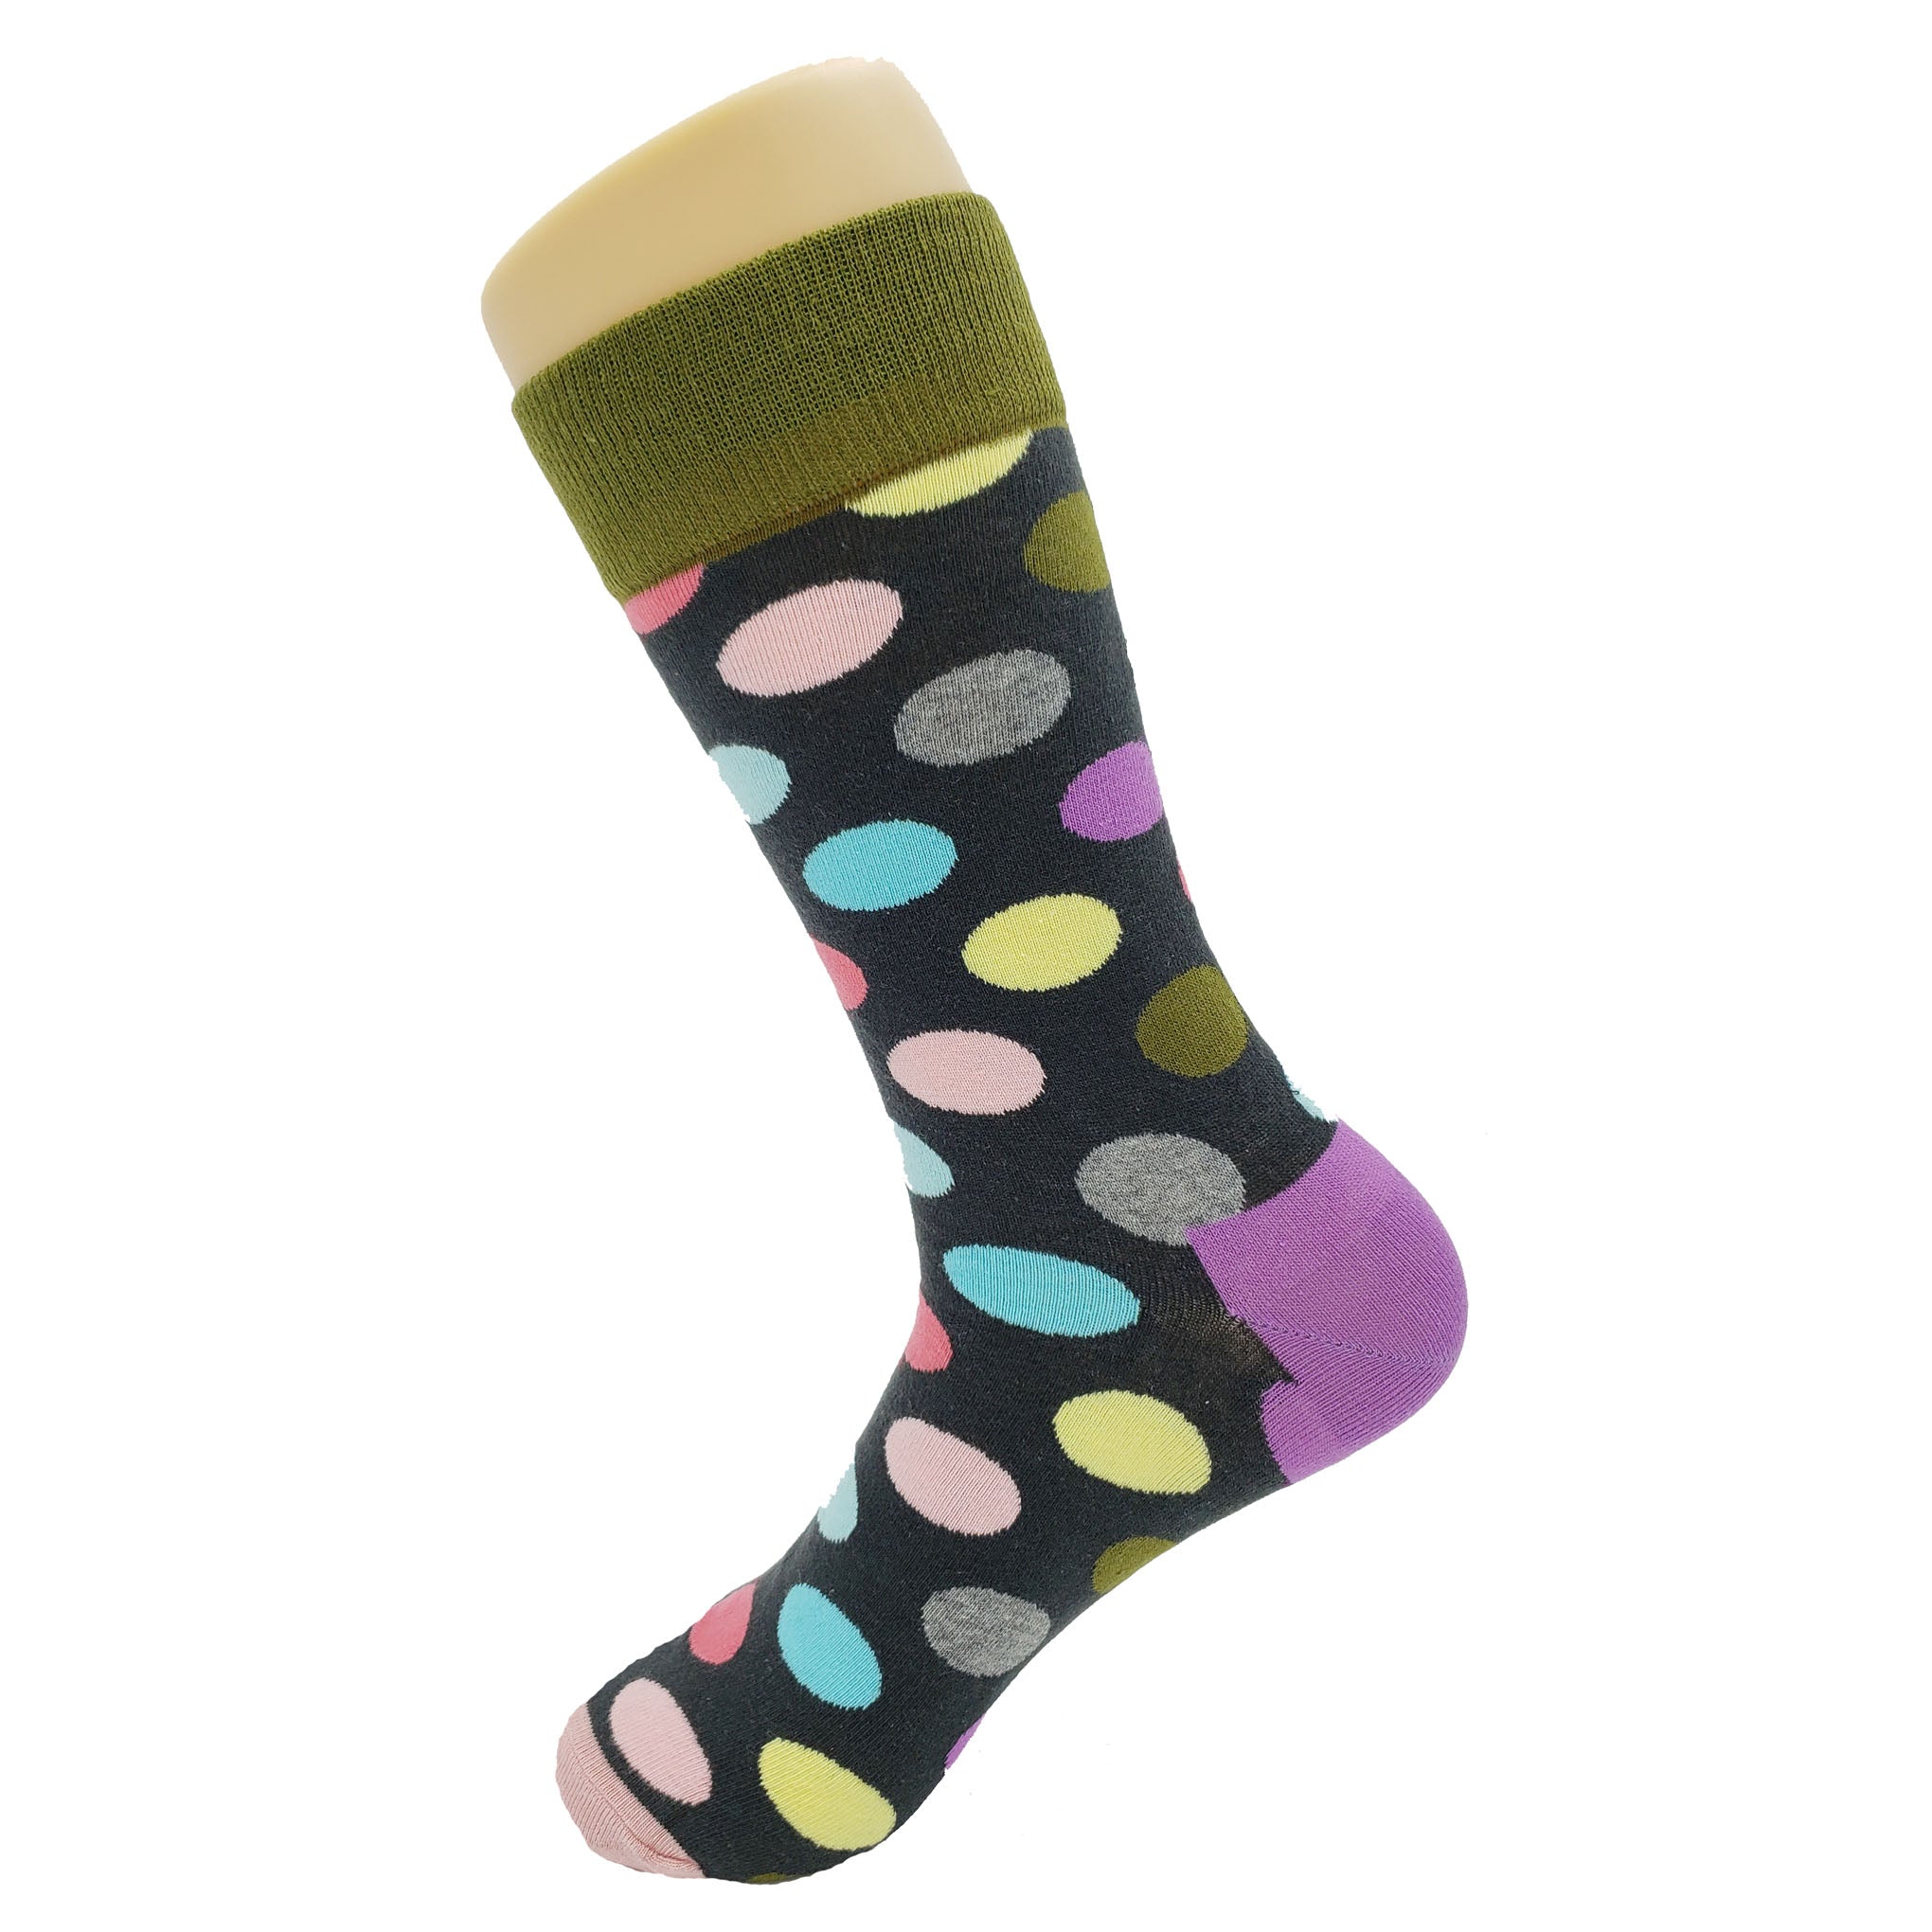 Special Polka Dot Socks - Fun and Crazy Socks at Sockfly.com